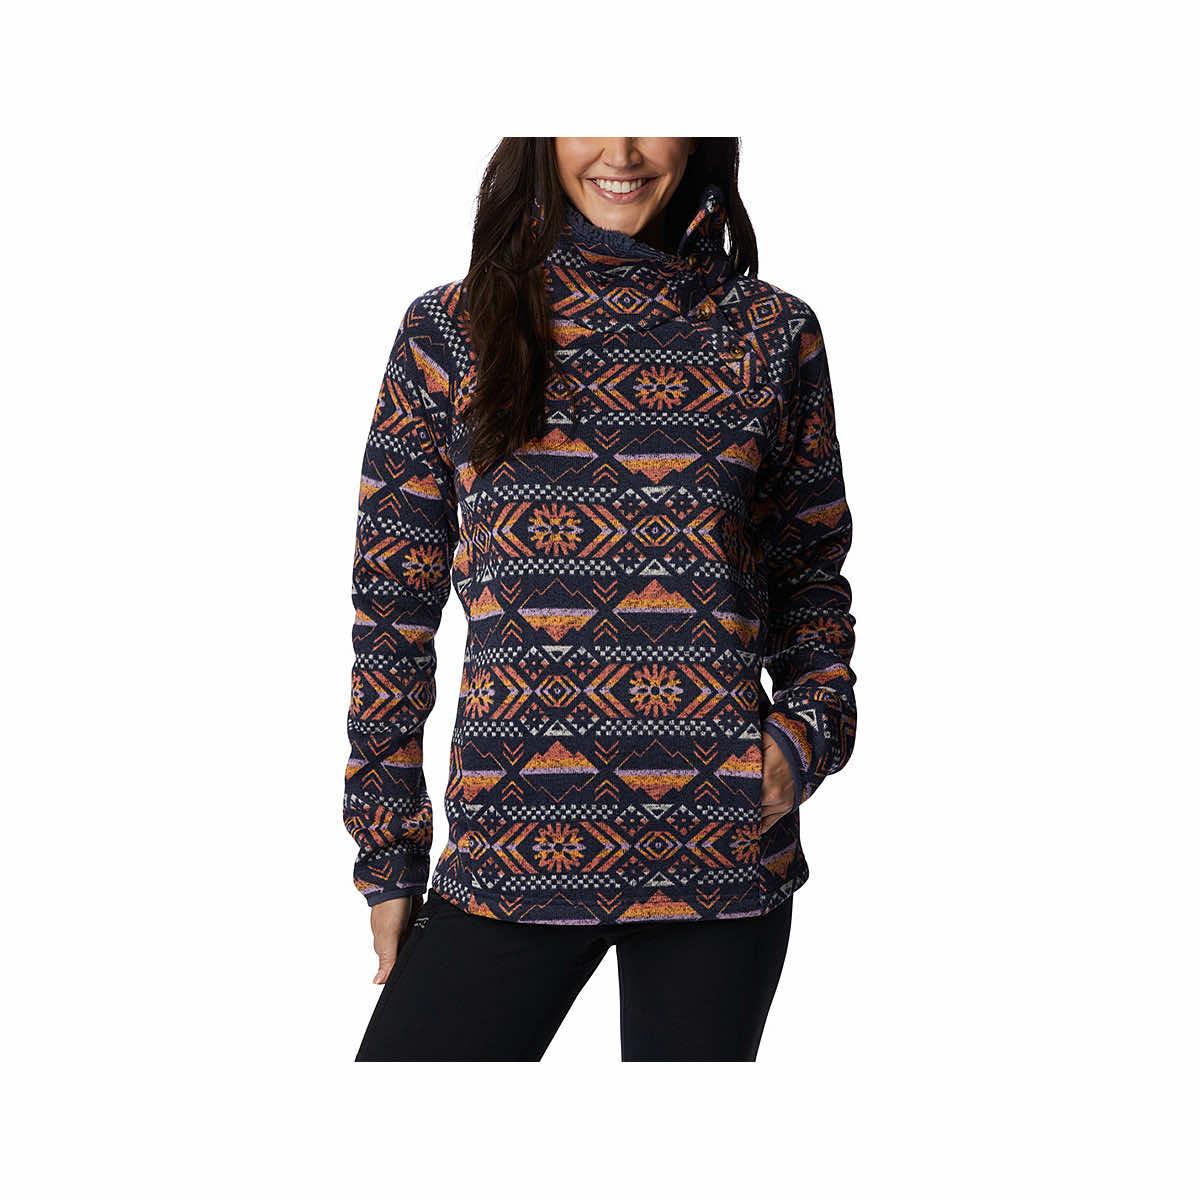  Women's Sweater Weather Sherpa Hybrid Pullover